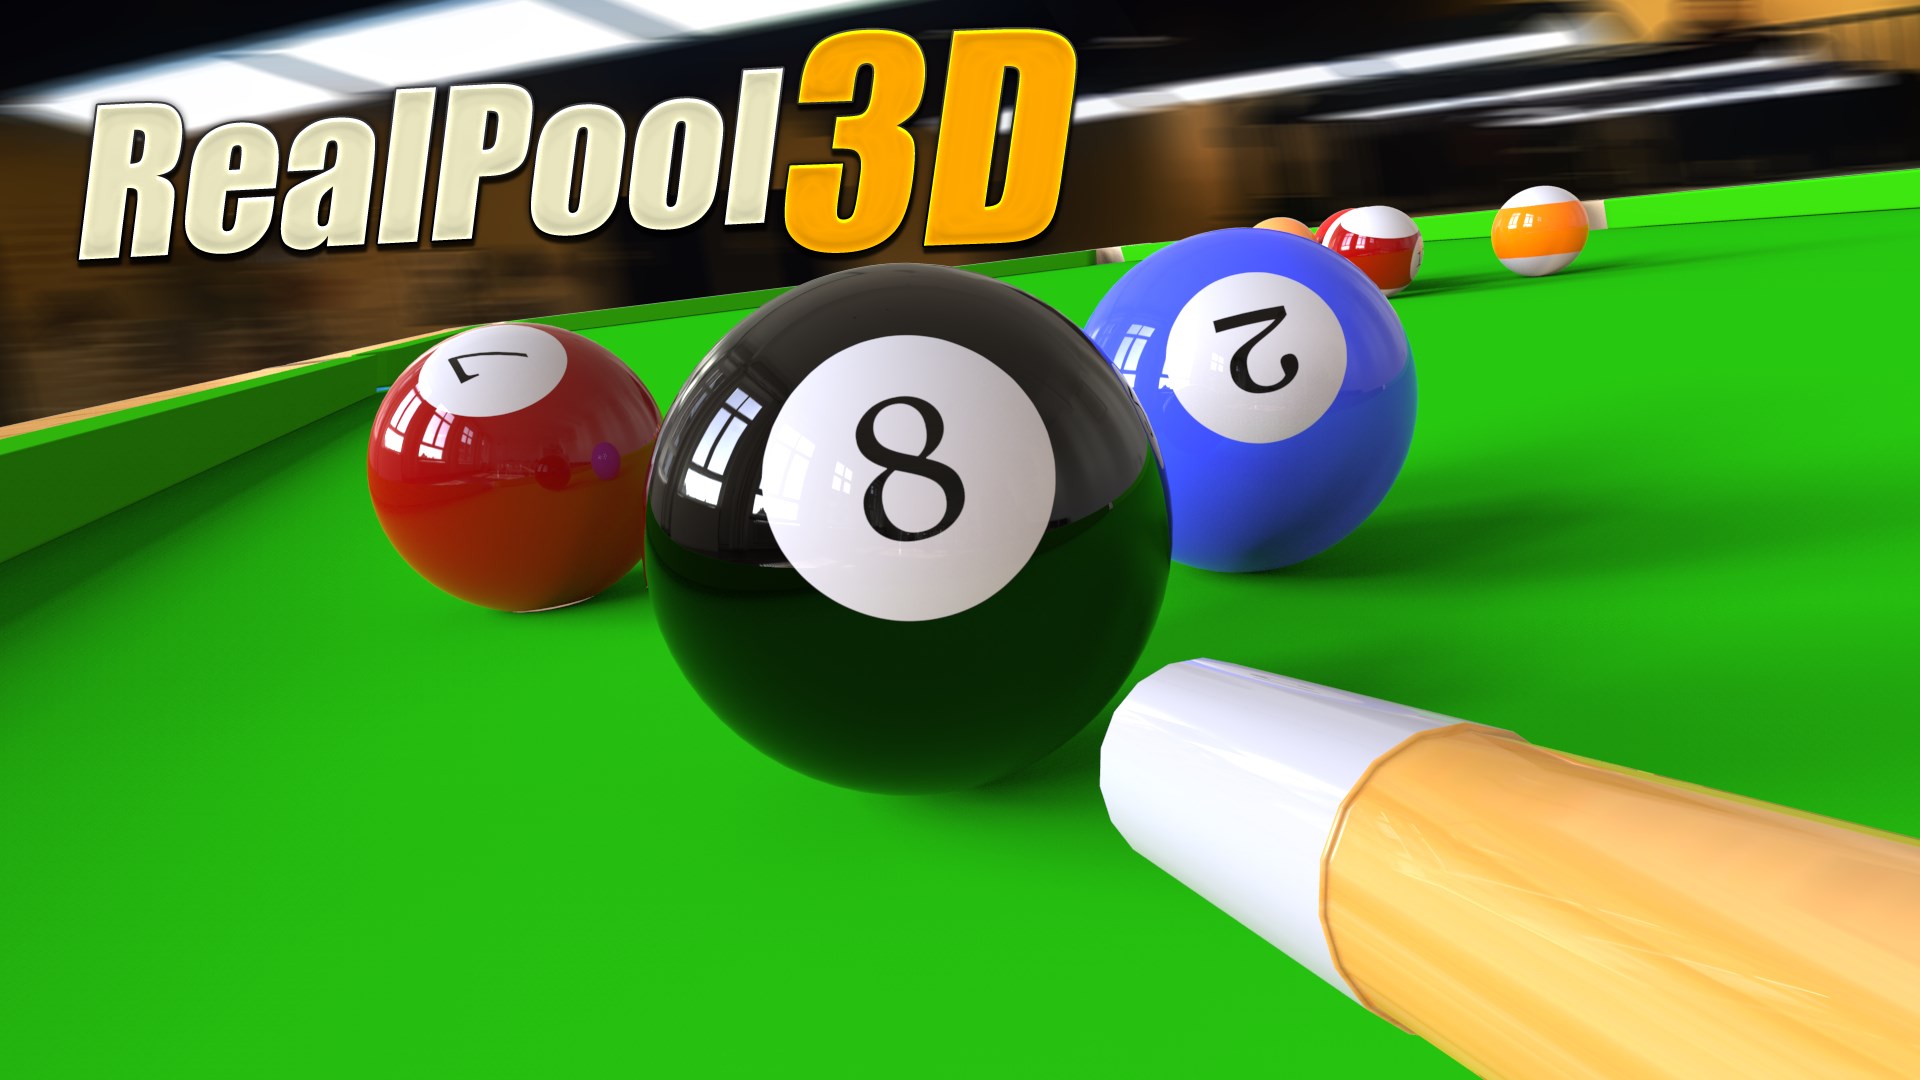 Real Pool 3d